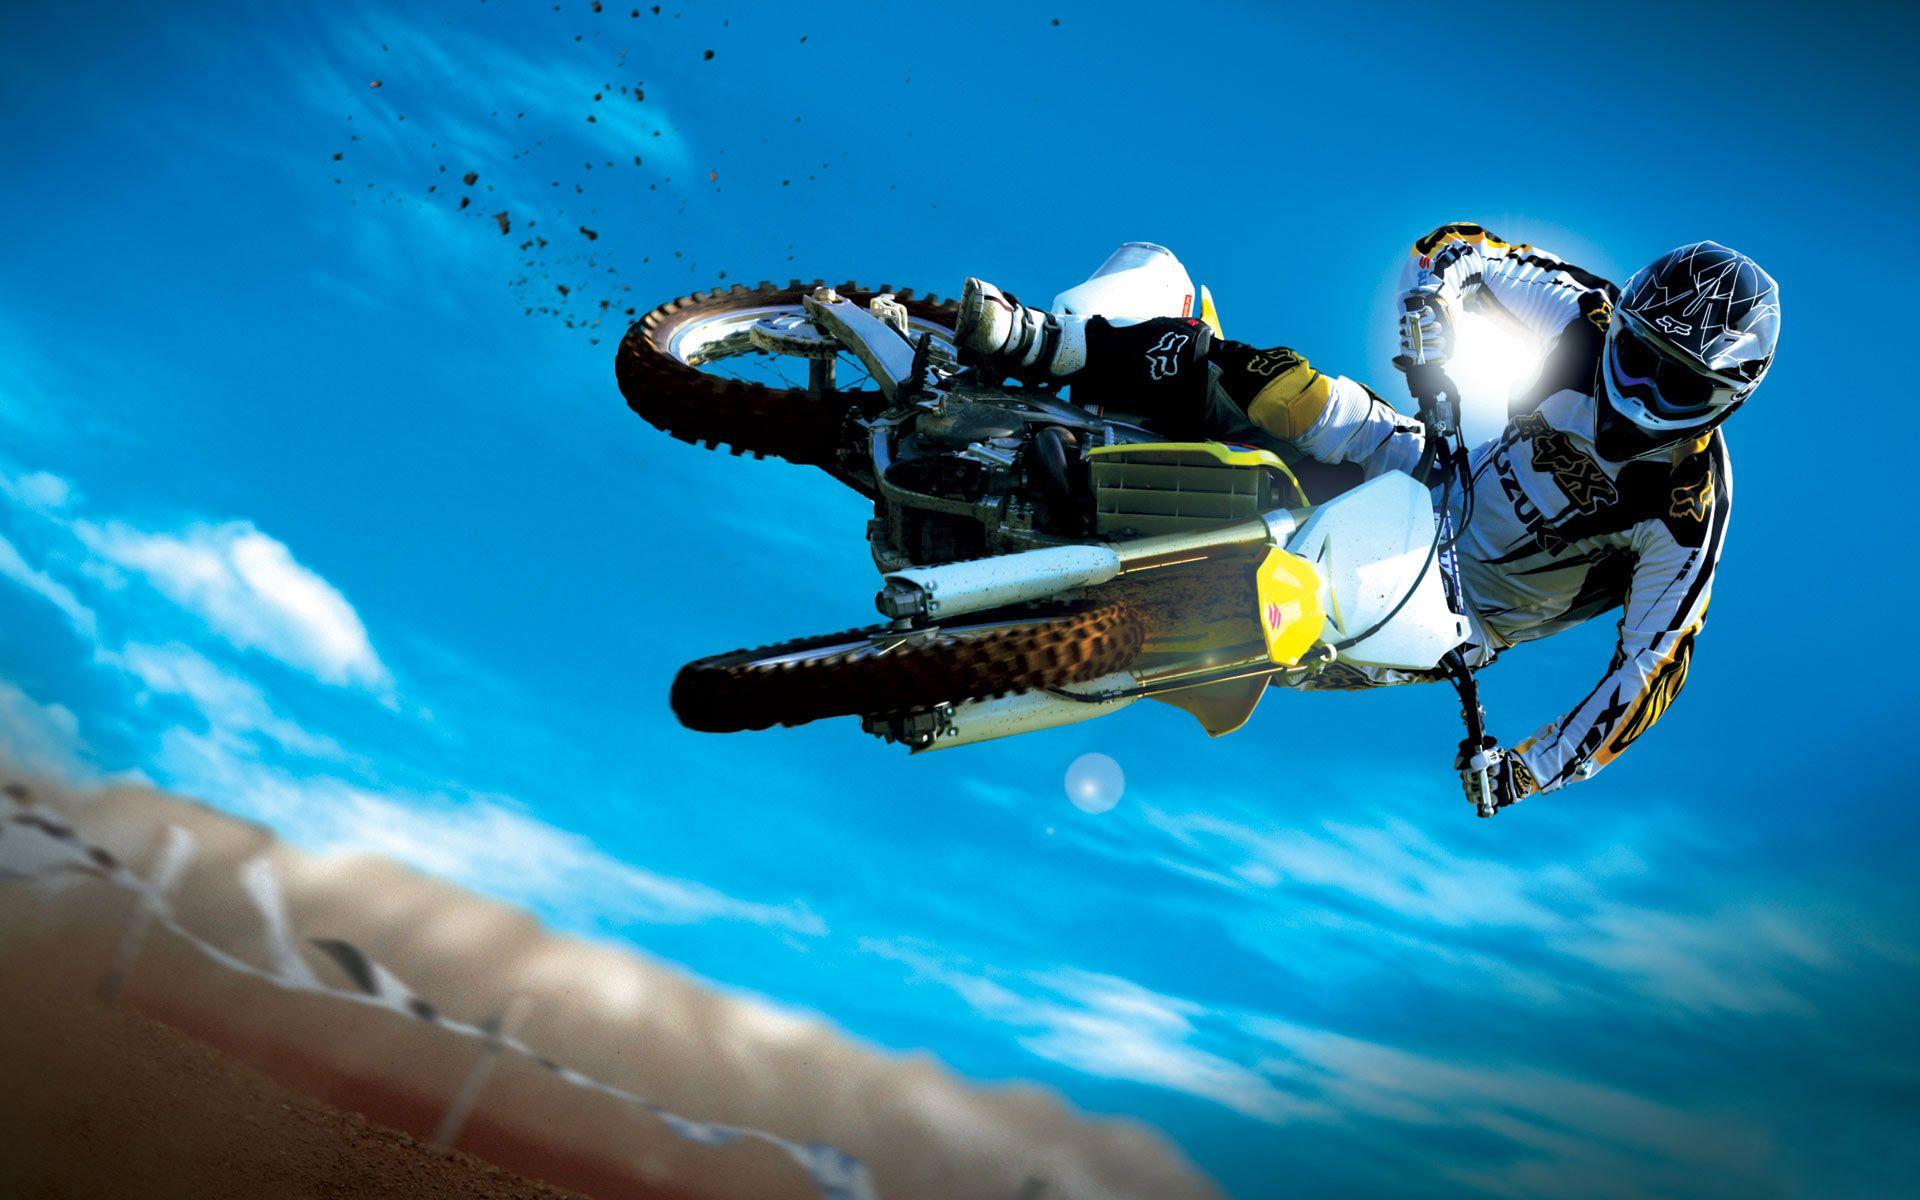 Amazing Motocross Bike Stunt Wallpaper